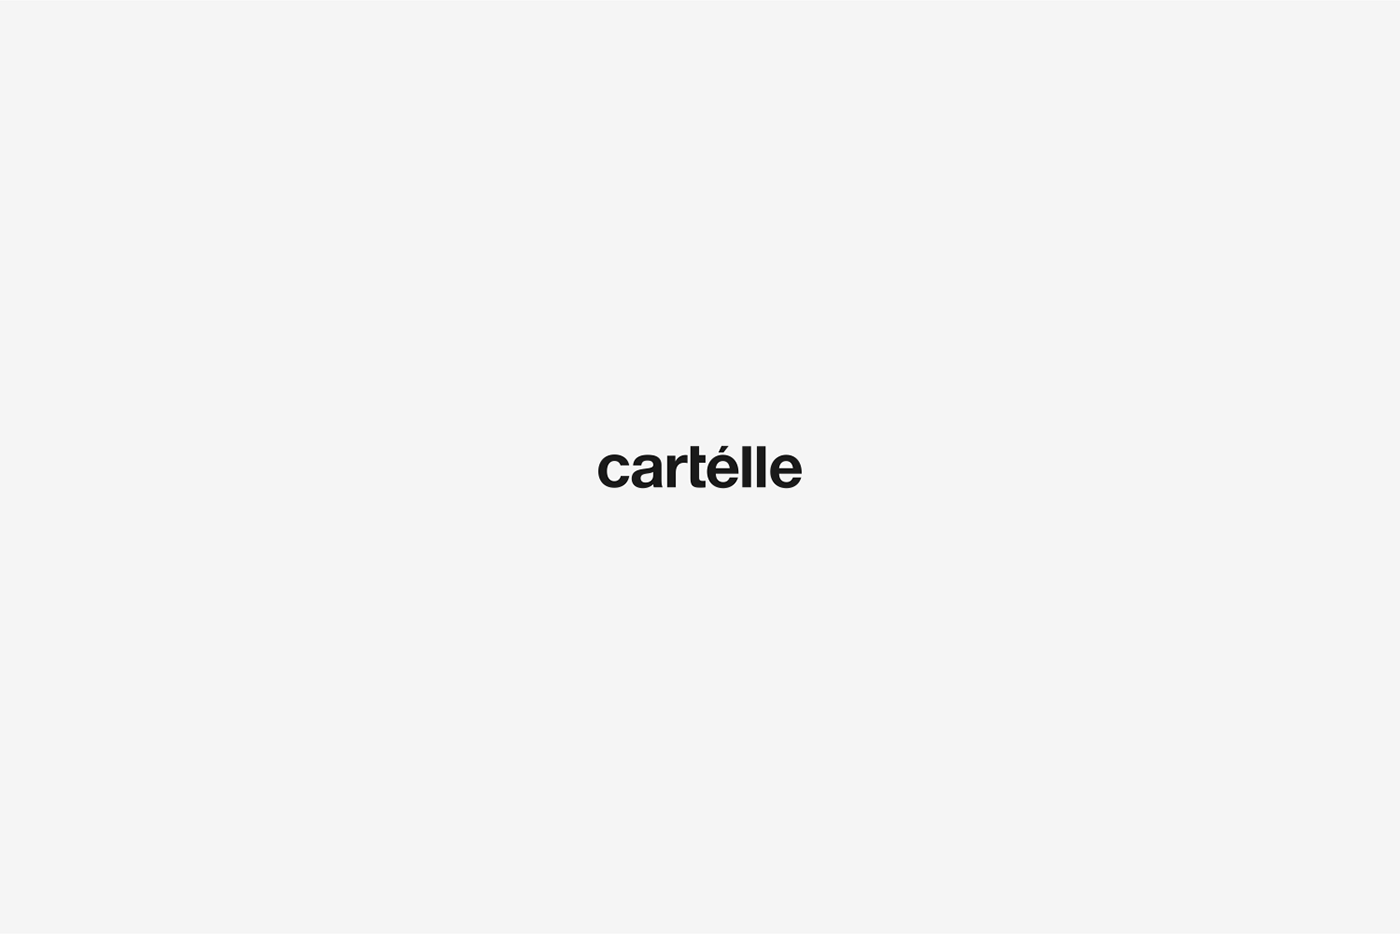 cartelle design agency Web studio Independent minimal logo brand site identity type inspire